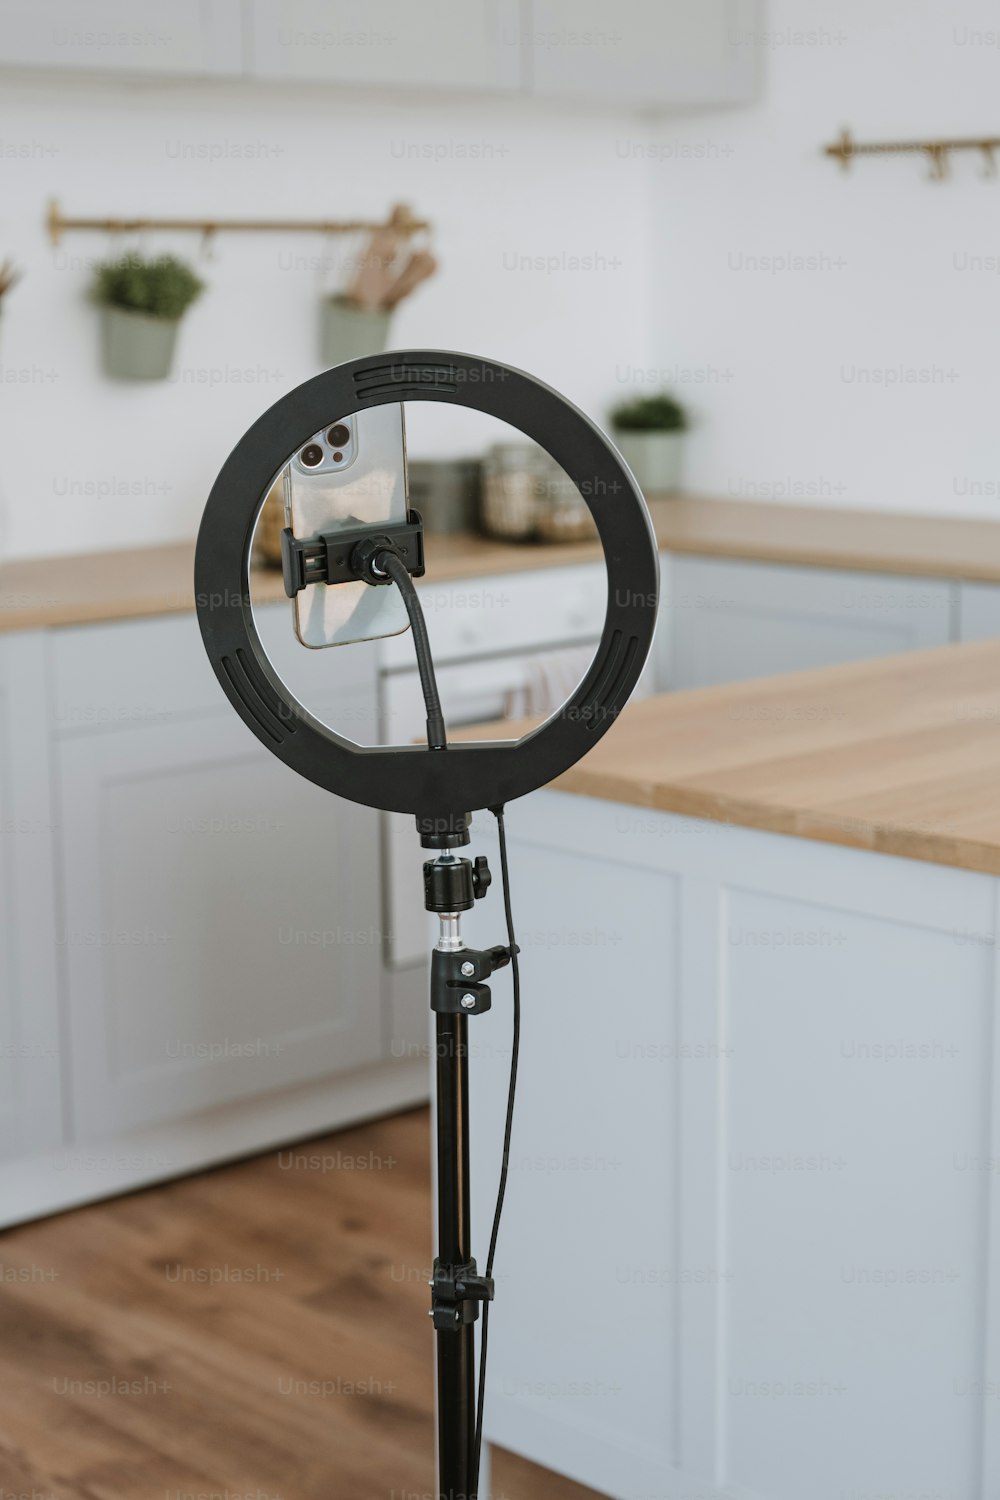 a camera on a tripod in a kitchen